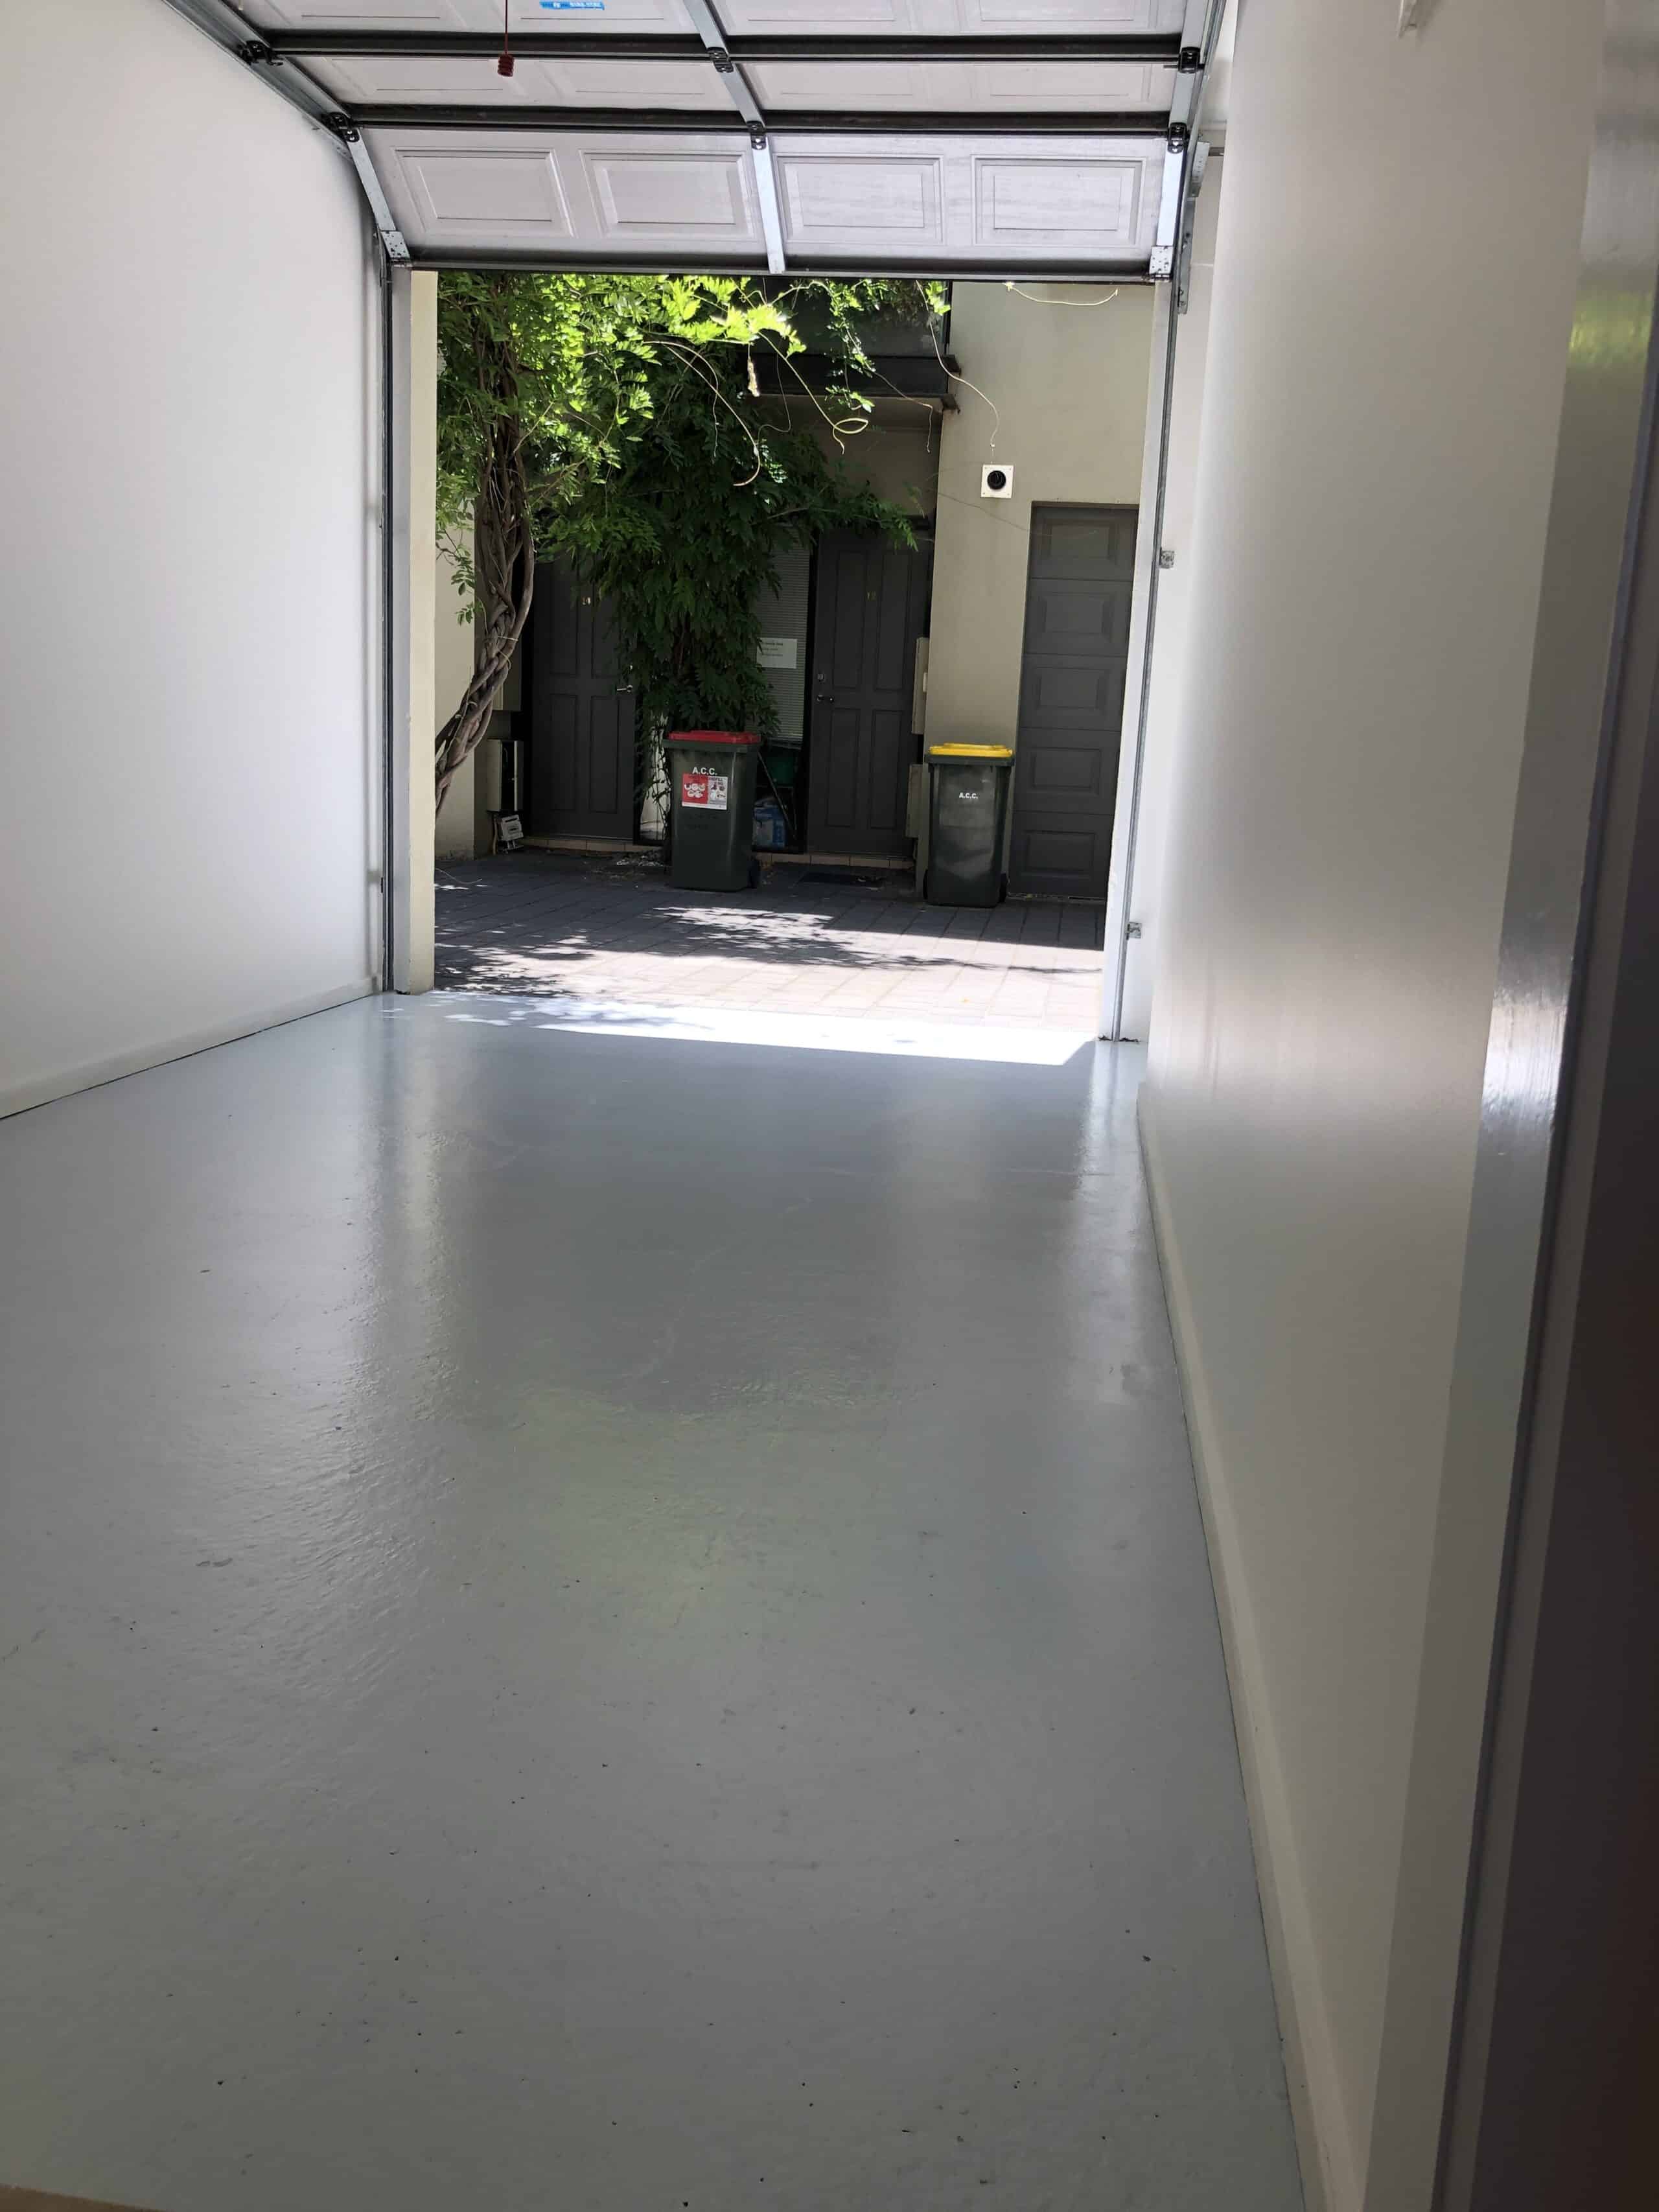 Garage floor epoxy painting